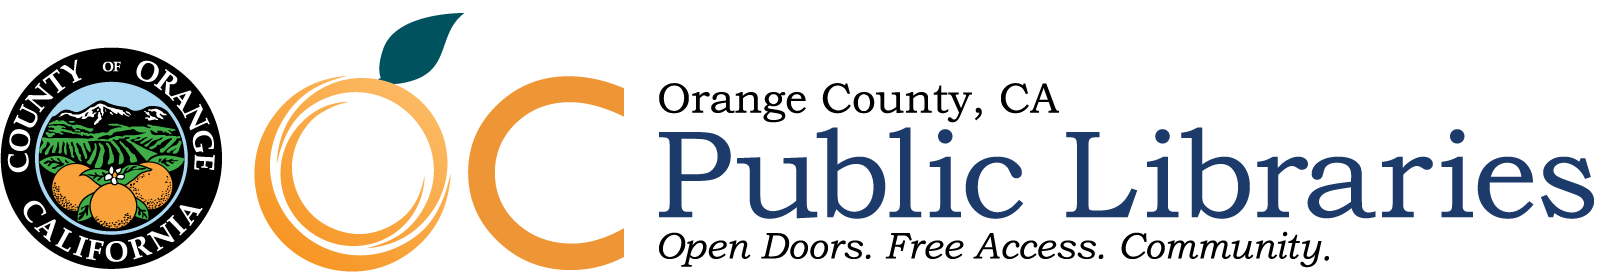 OC Public Libraries logo